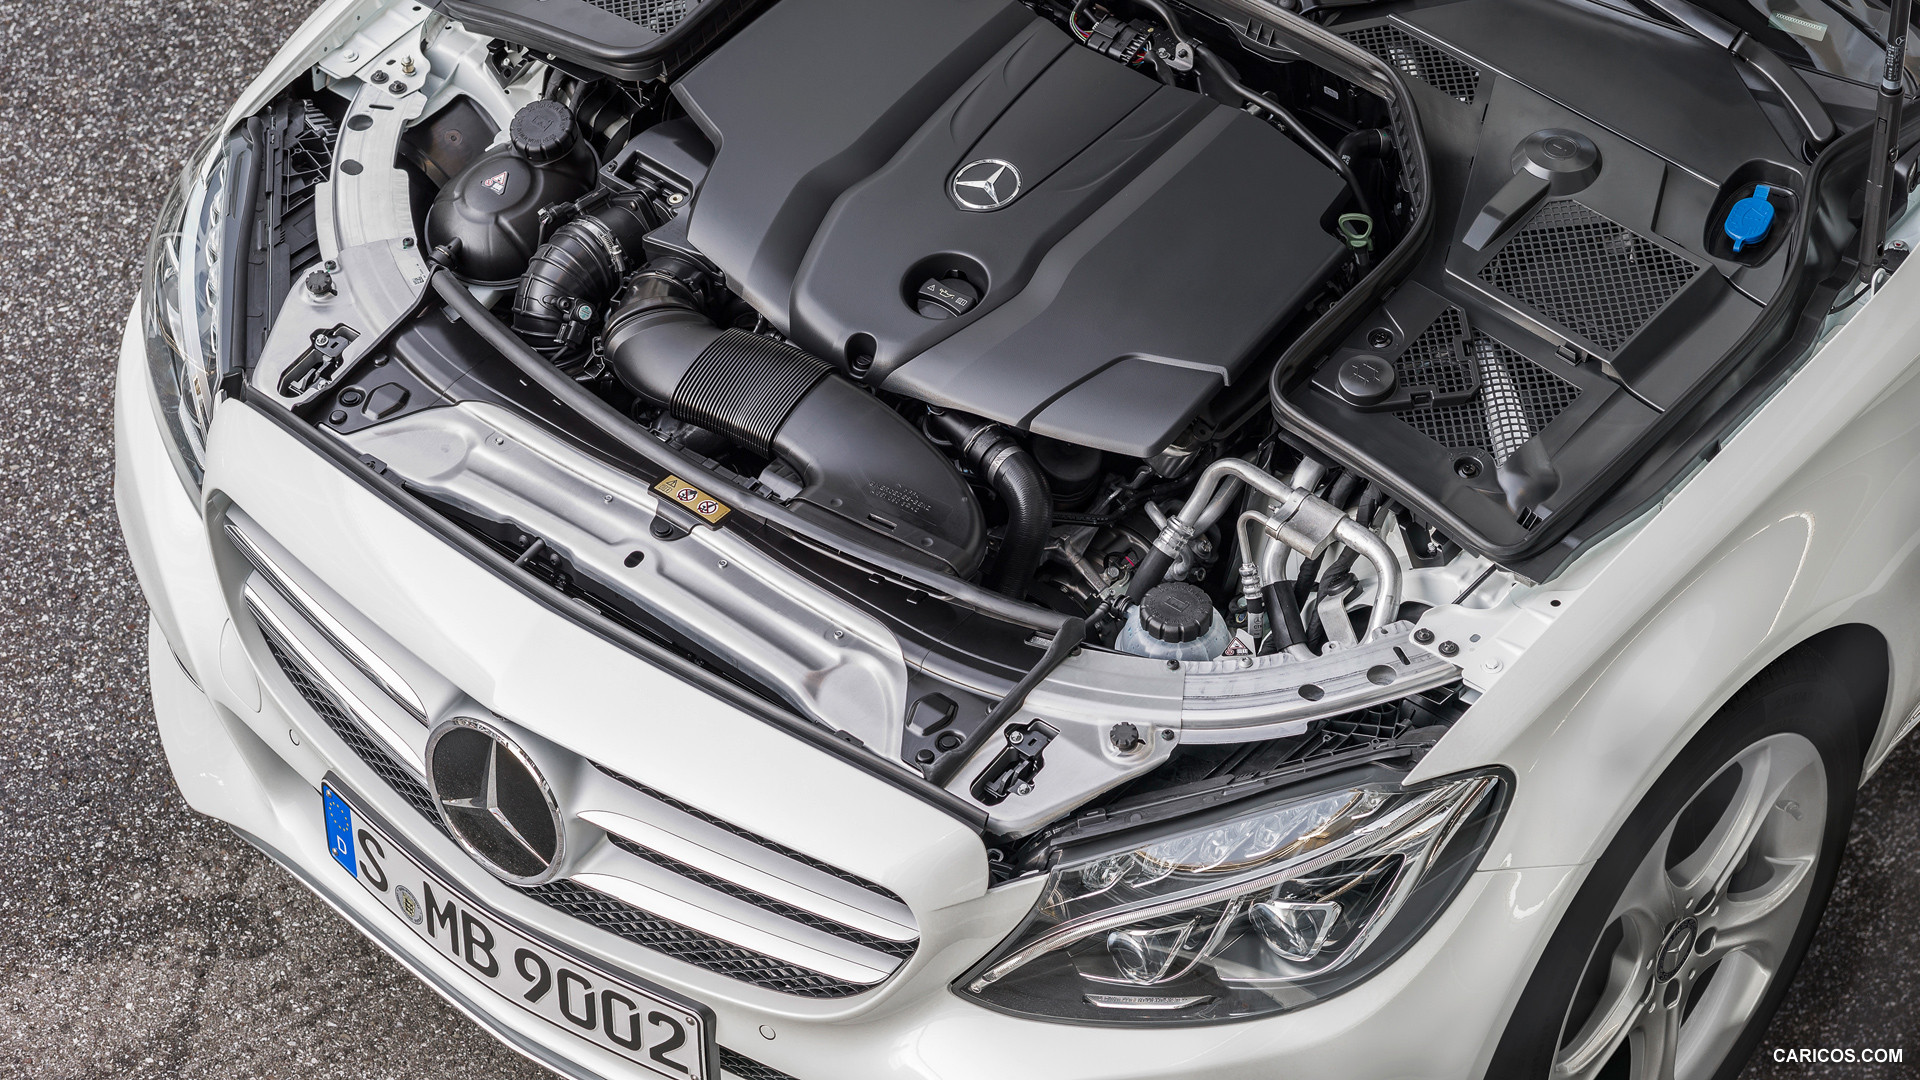 2015 Mercedes-Benz C-Class C250 BlueTEC (Avantgarde) - Engine, #177 of 181